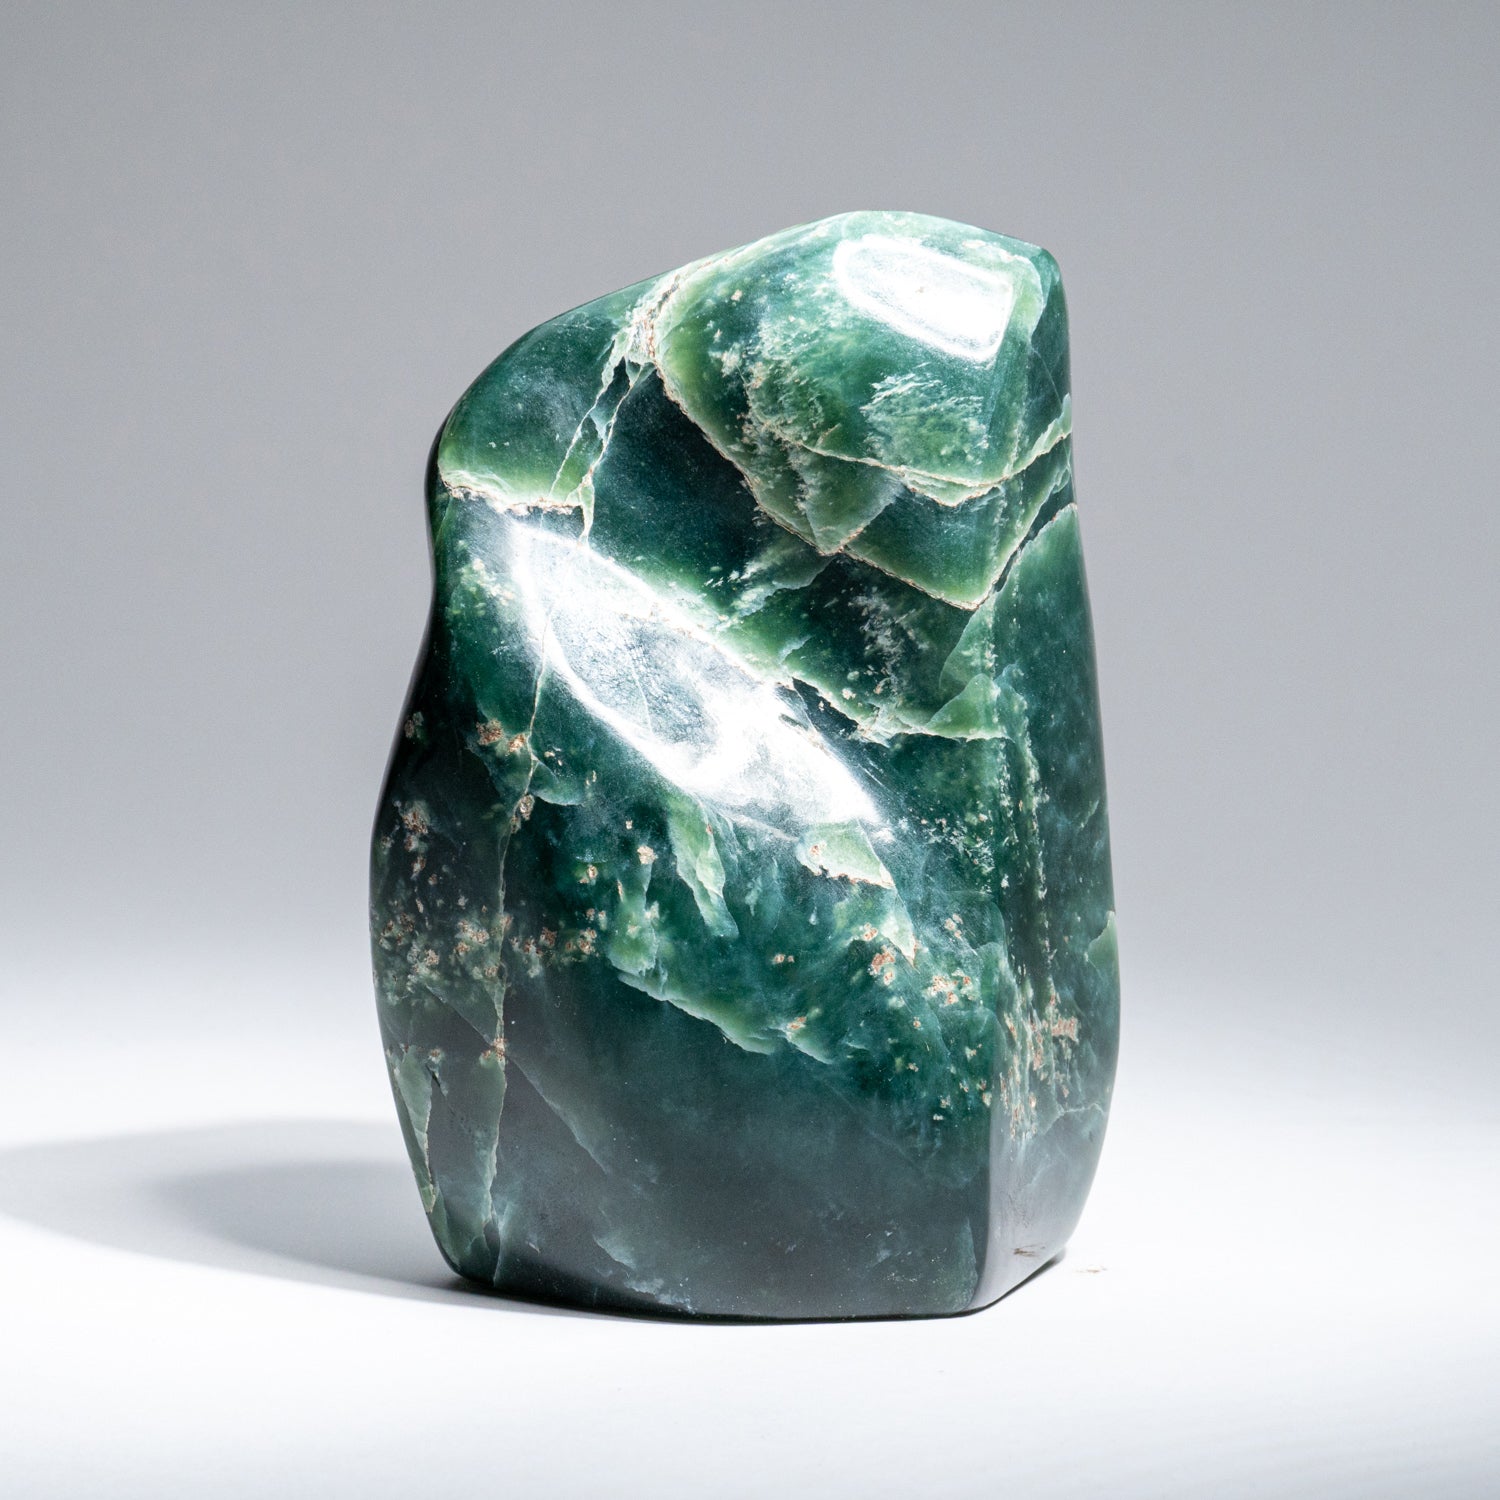 Polished Nephrite Jade Freeform from Pakistan (1.7 lbs)